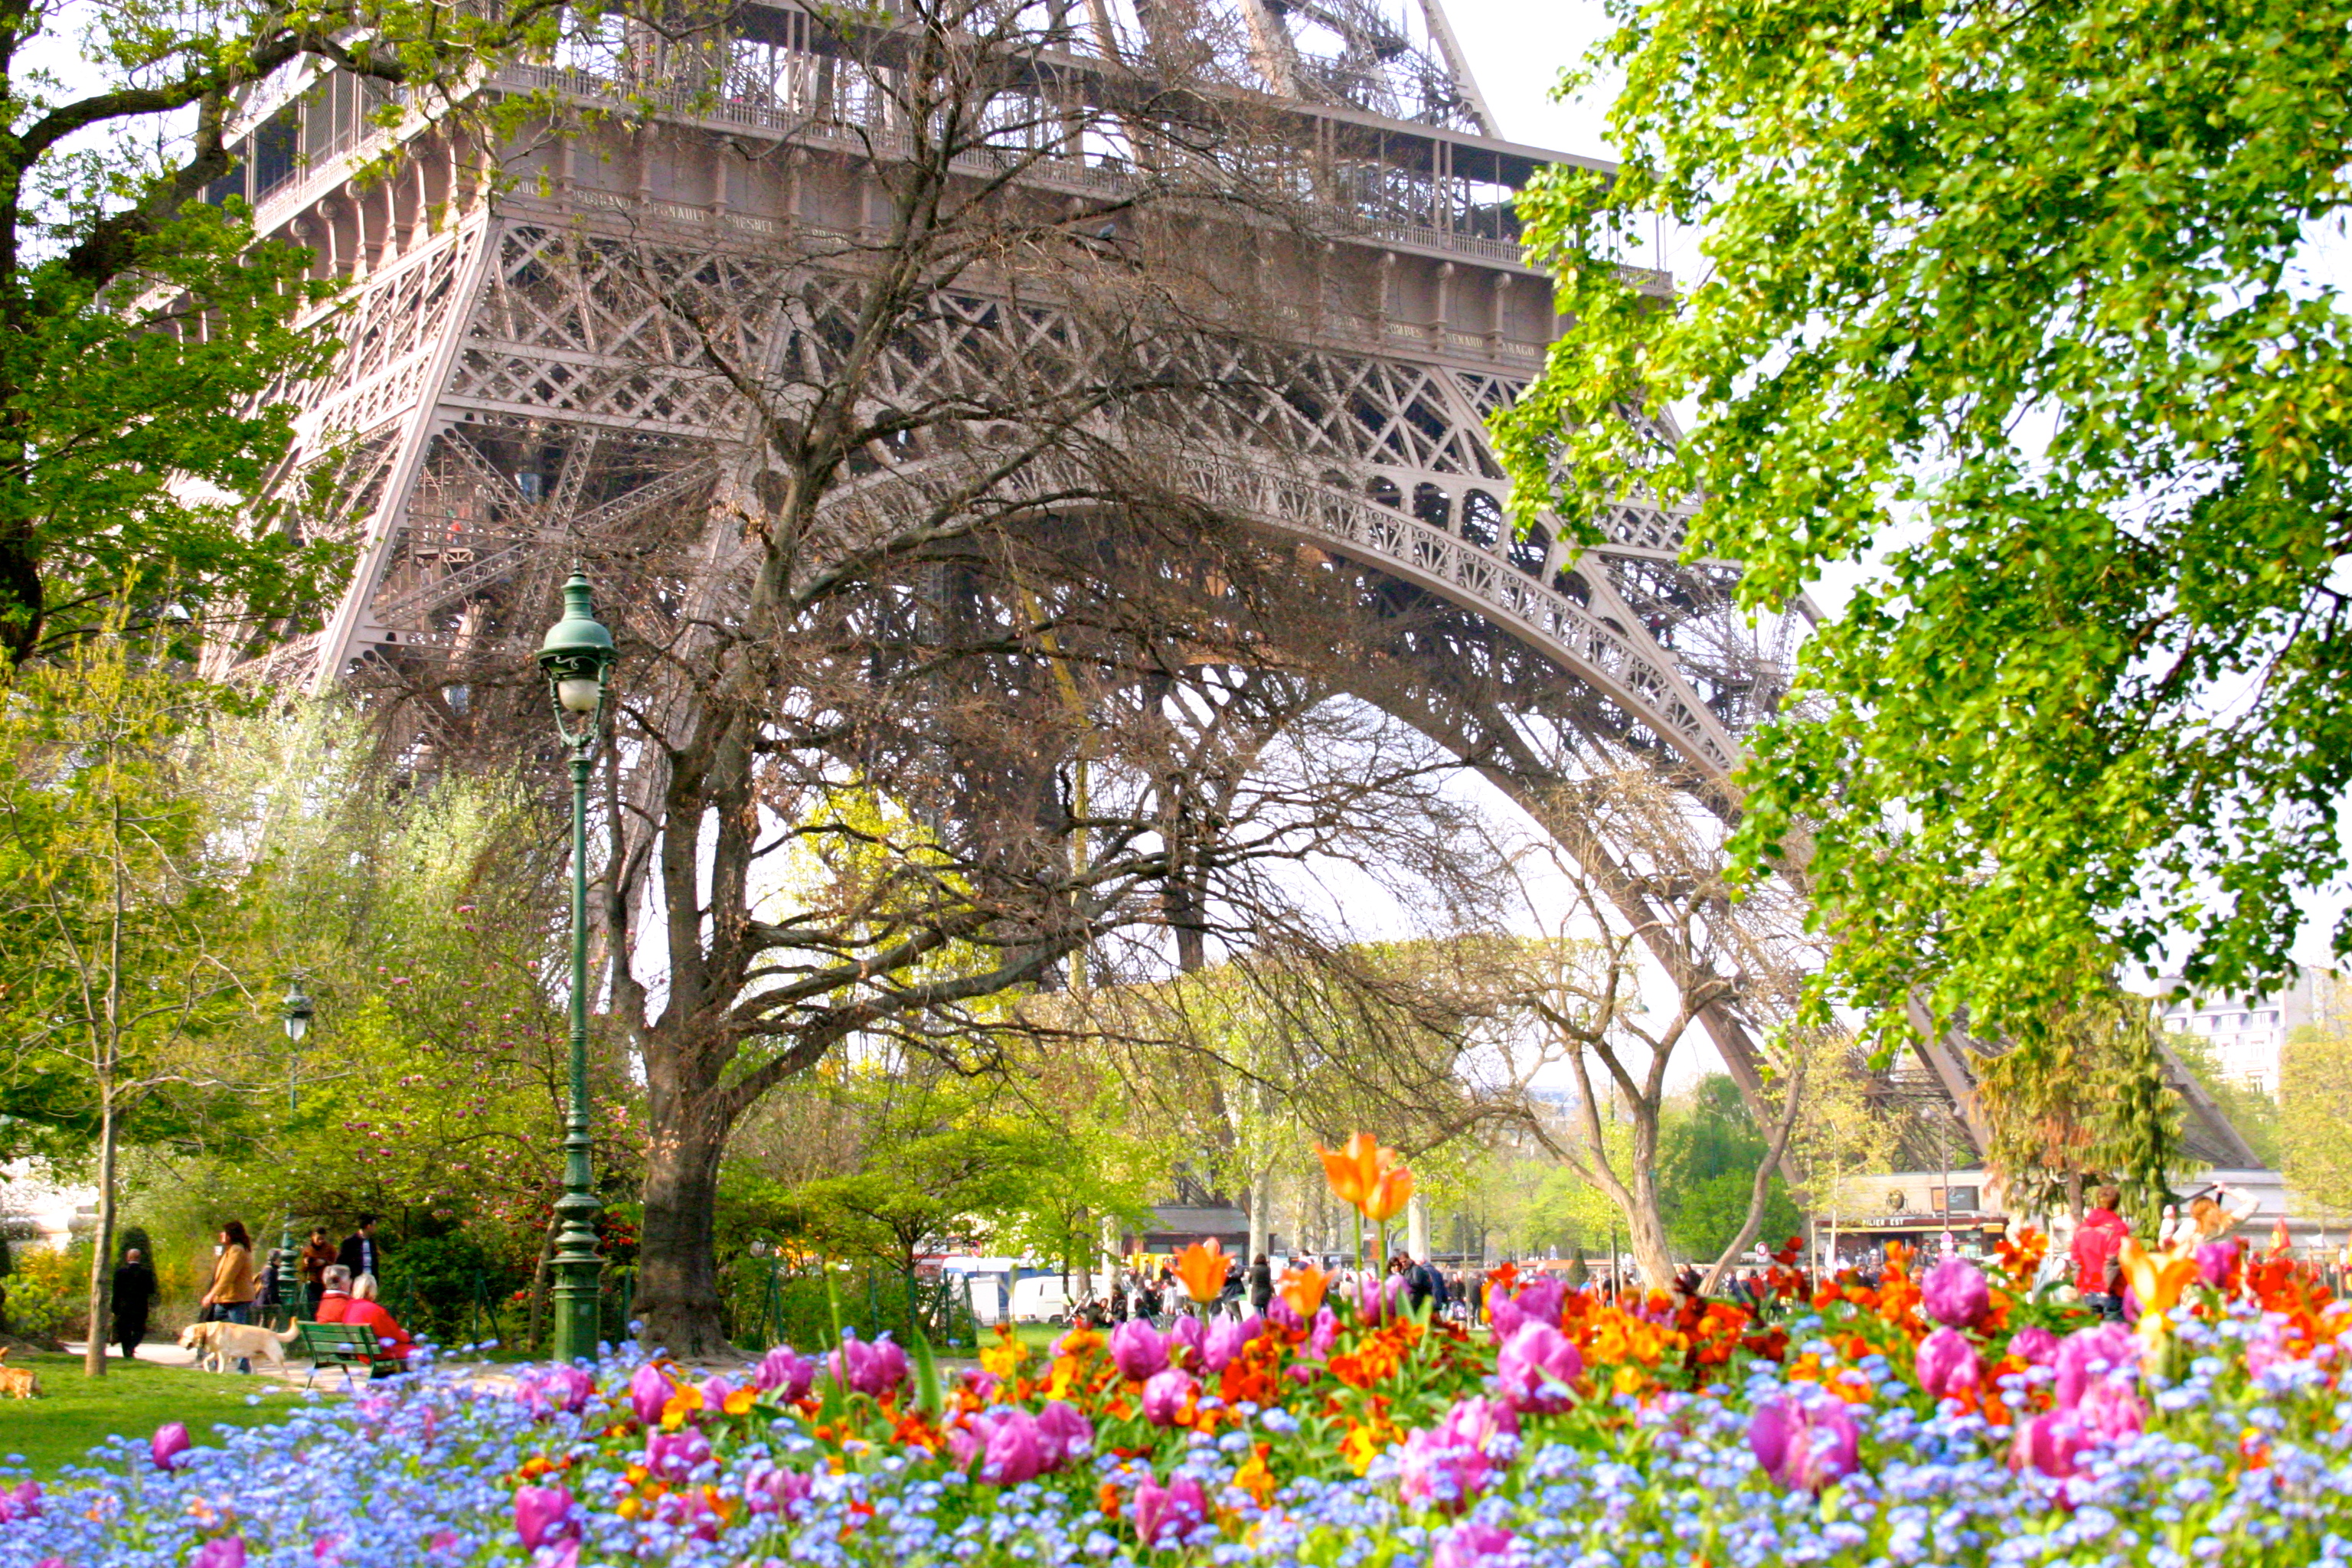 Tour Eiffel, Eiffel Tower, Julia Willard, Julie Willard, Julia Arias, Paris, France, spring, cherry blossoms, jonquils, narcissus, flowers, flower, spring in Paris, Shakespeare & Co., Notre Dame